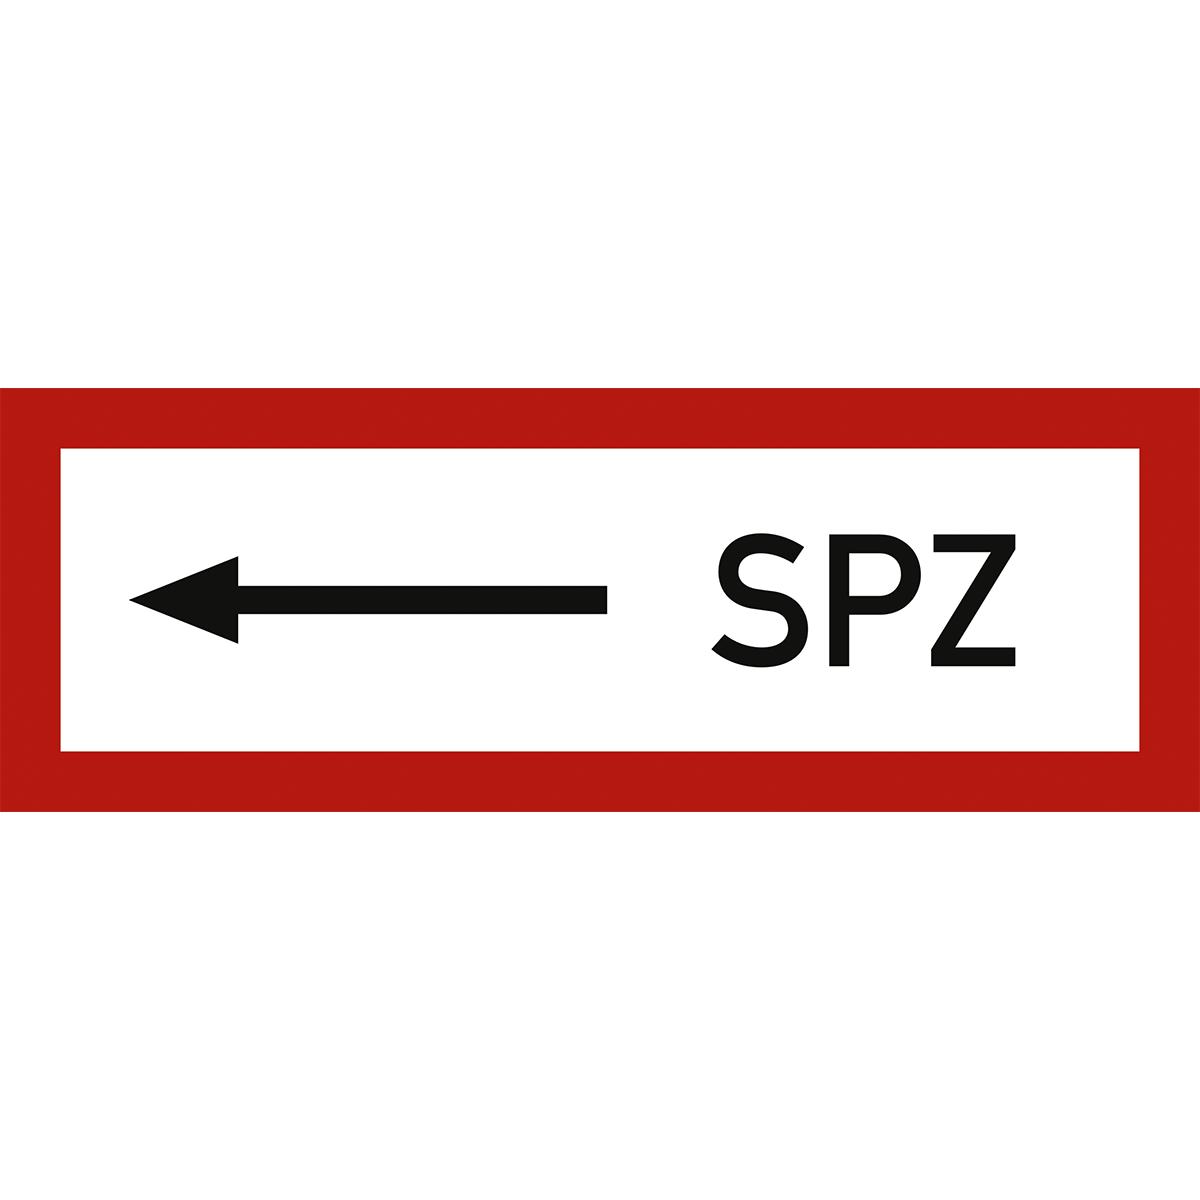 Hinweisschild mit dem Text: SPZ + Pfeil nach links